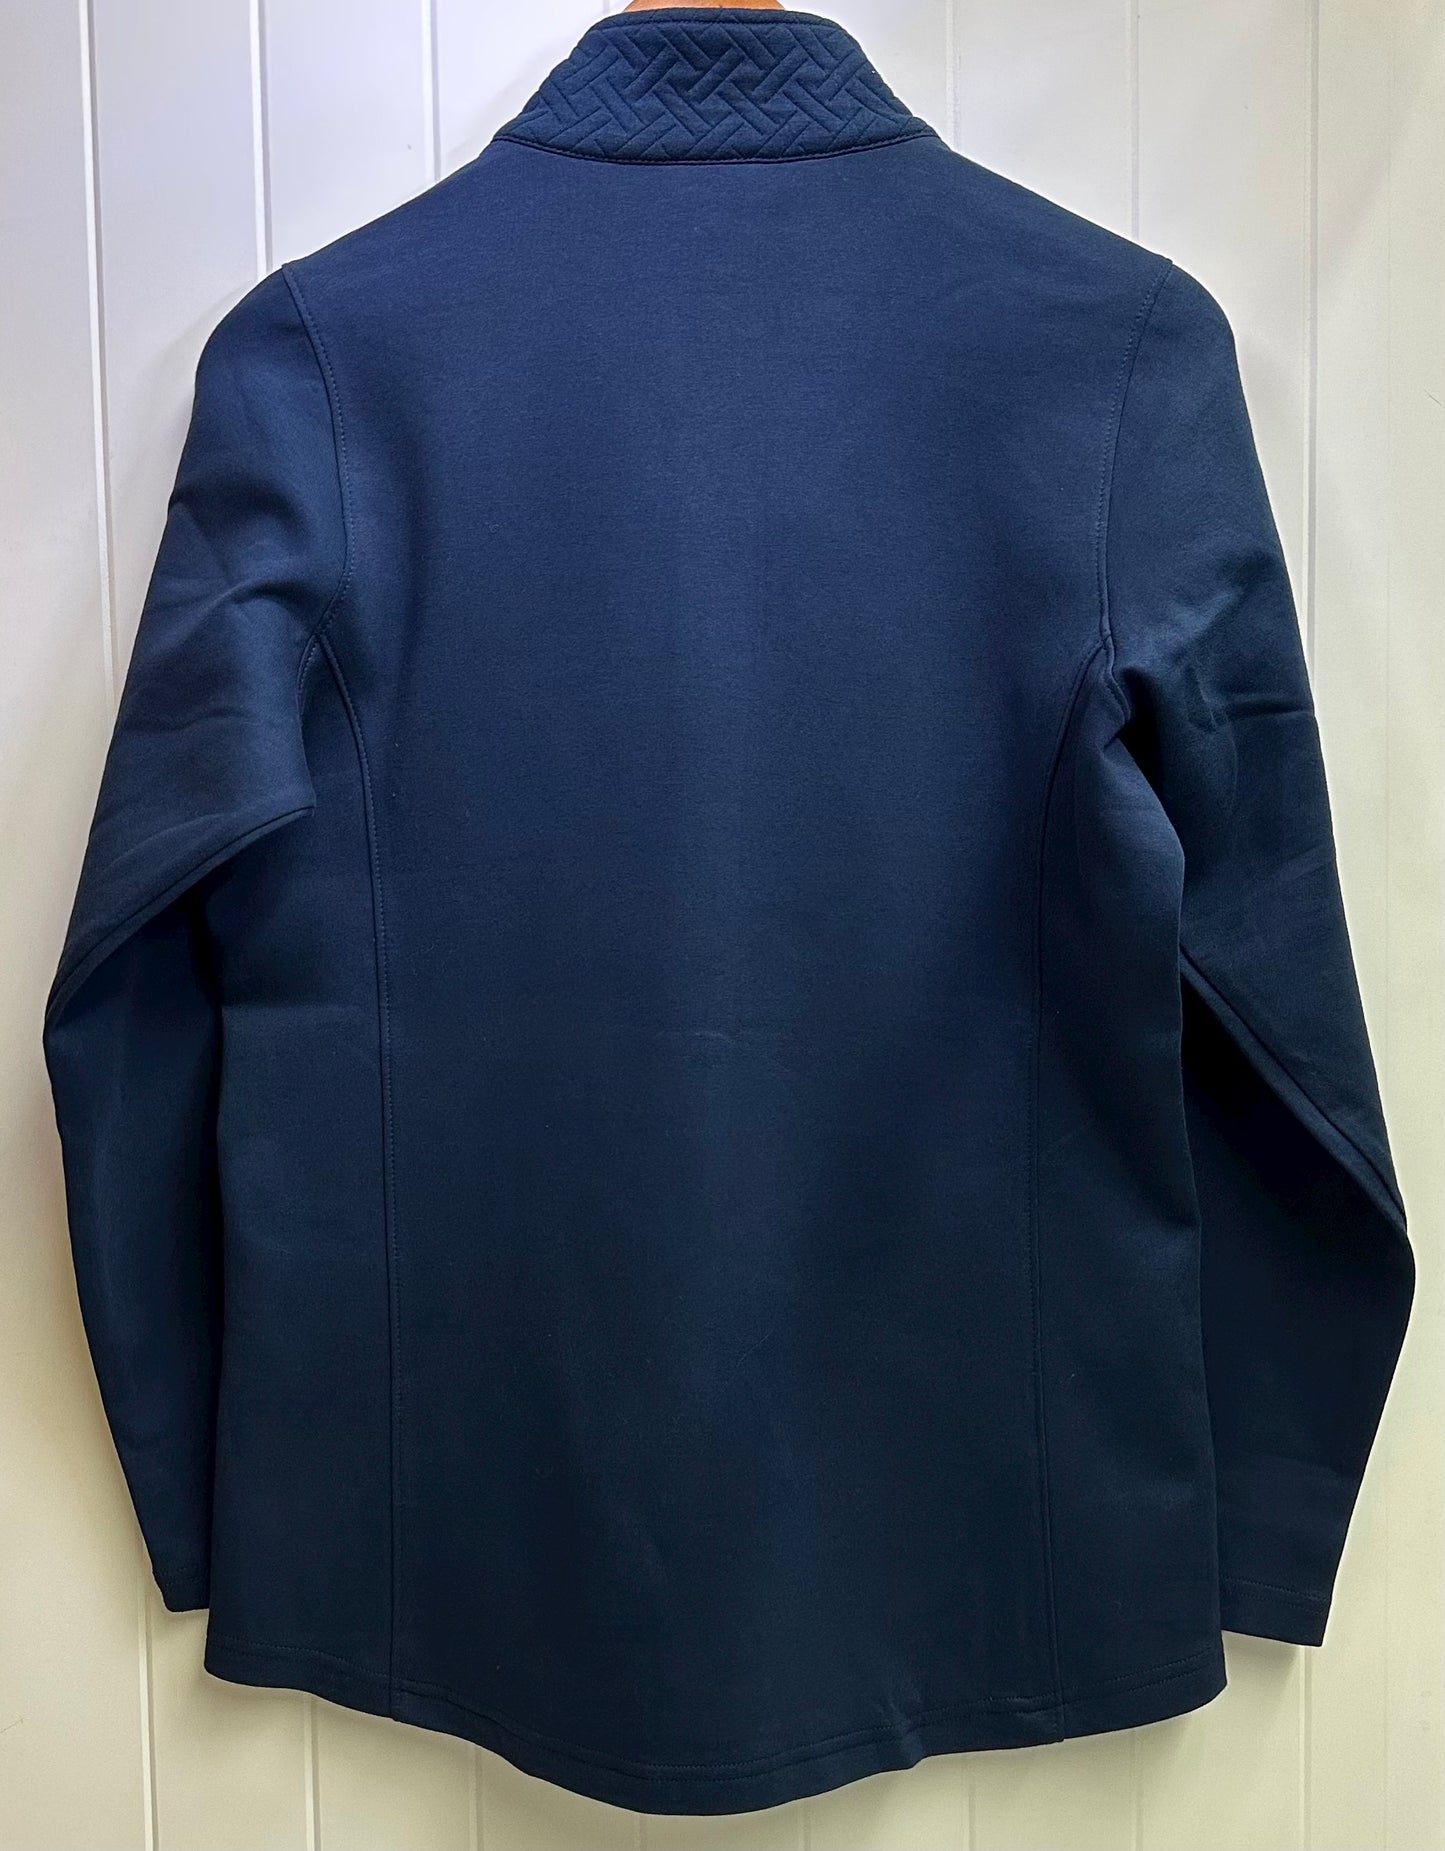 Kalisi Full Zip Jacket, 8.2 oz Double Knit